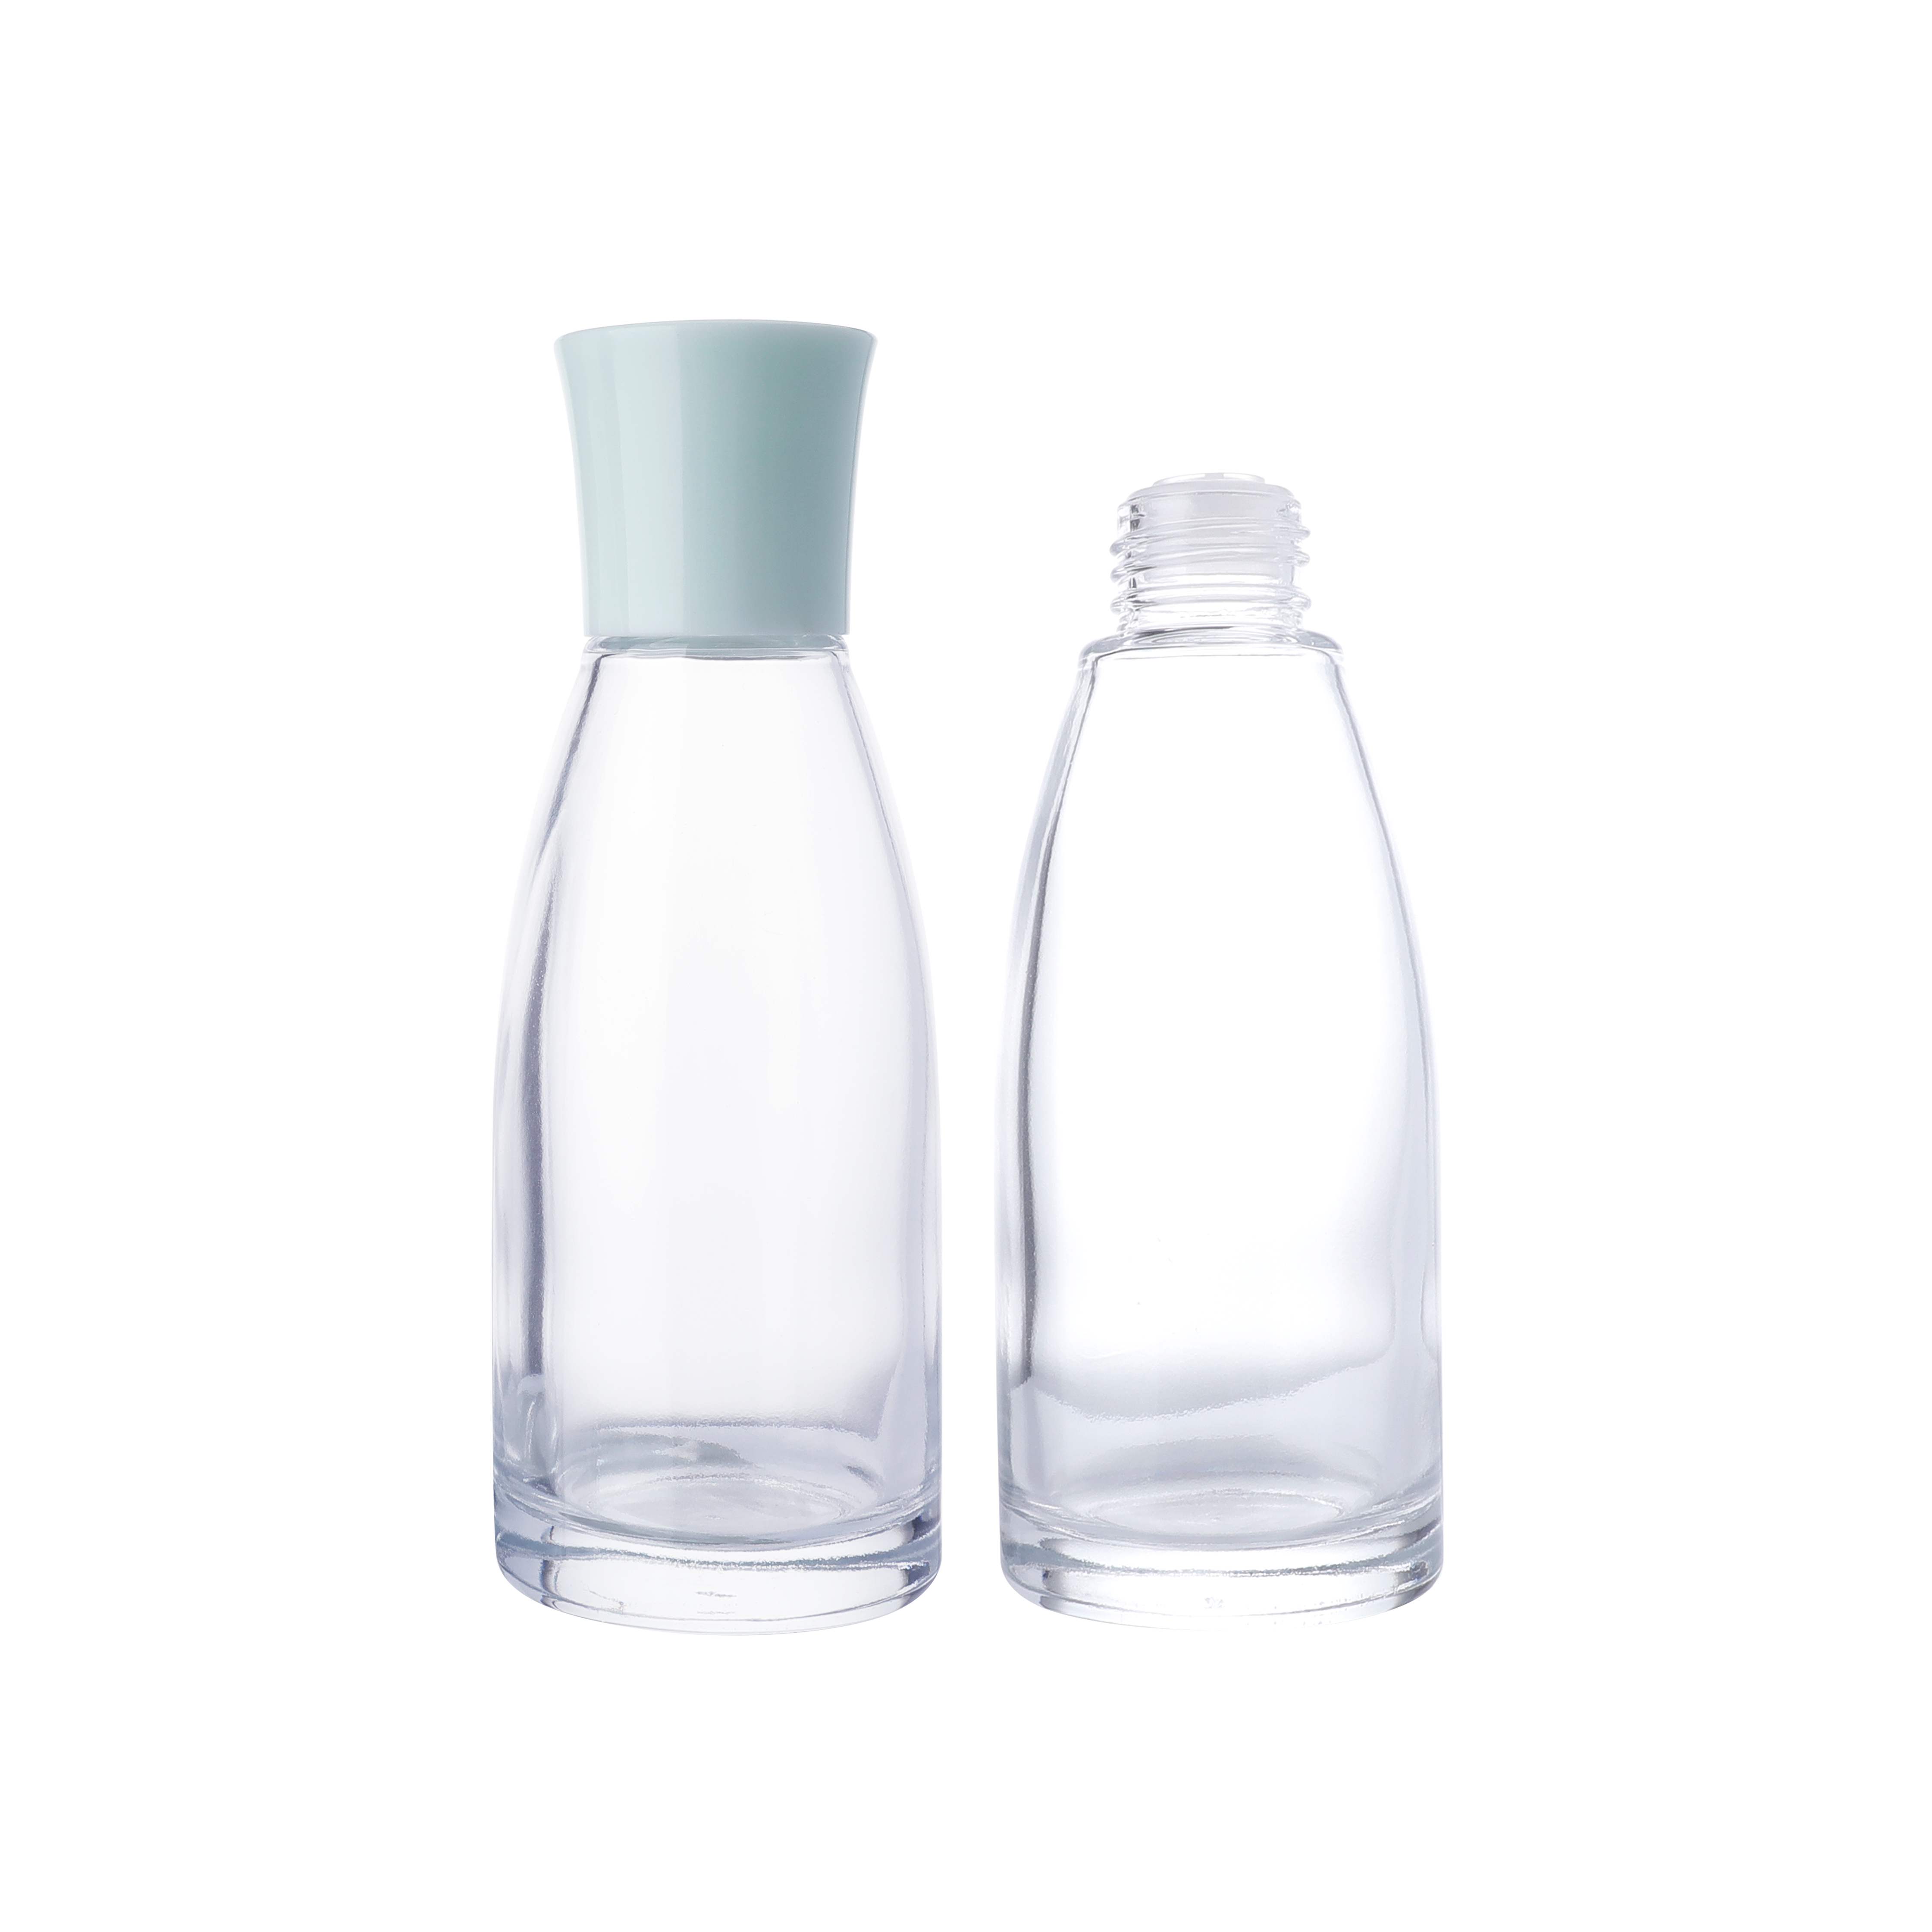 Simplicity Custom Printing And Size Volume 30ml 50ml 100ml 120ml Screw Lid Transparency Multipurpose Cream Liquid Perfume Empty Glass Bottles with Pump